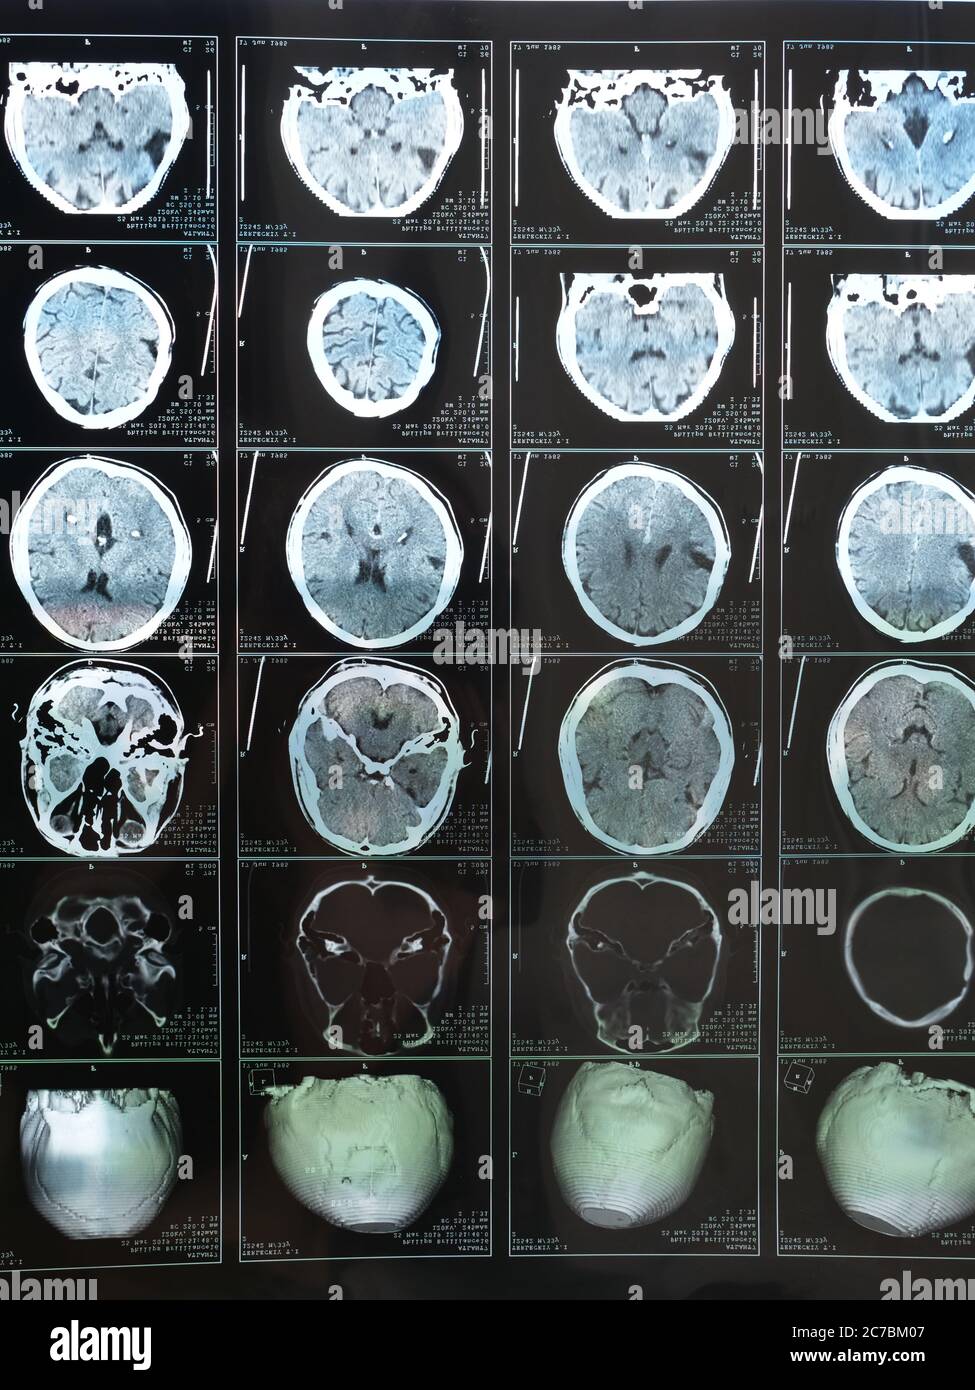 MRI of the braiMRI scan of the human brain after traumatic brain injuryn after trauma. High quality photo Stock Photo